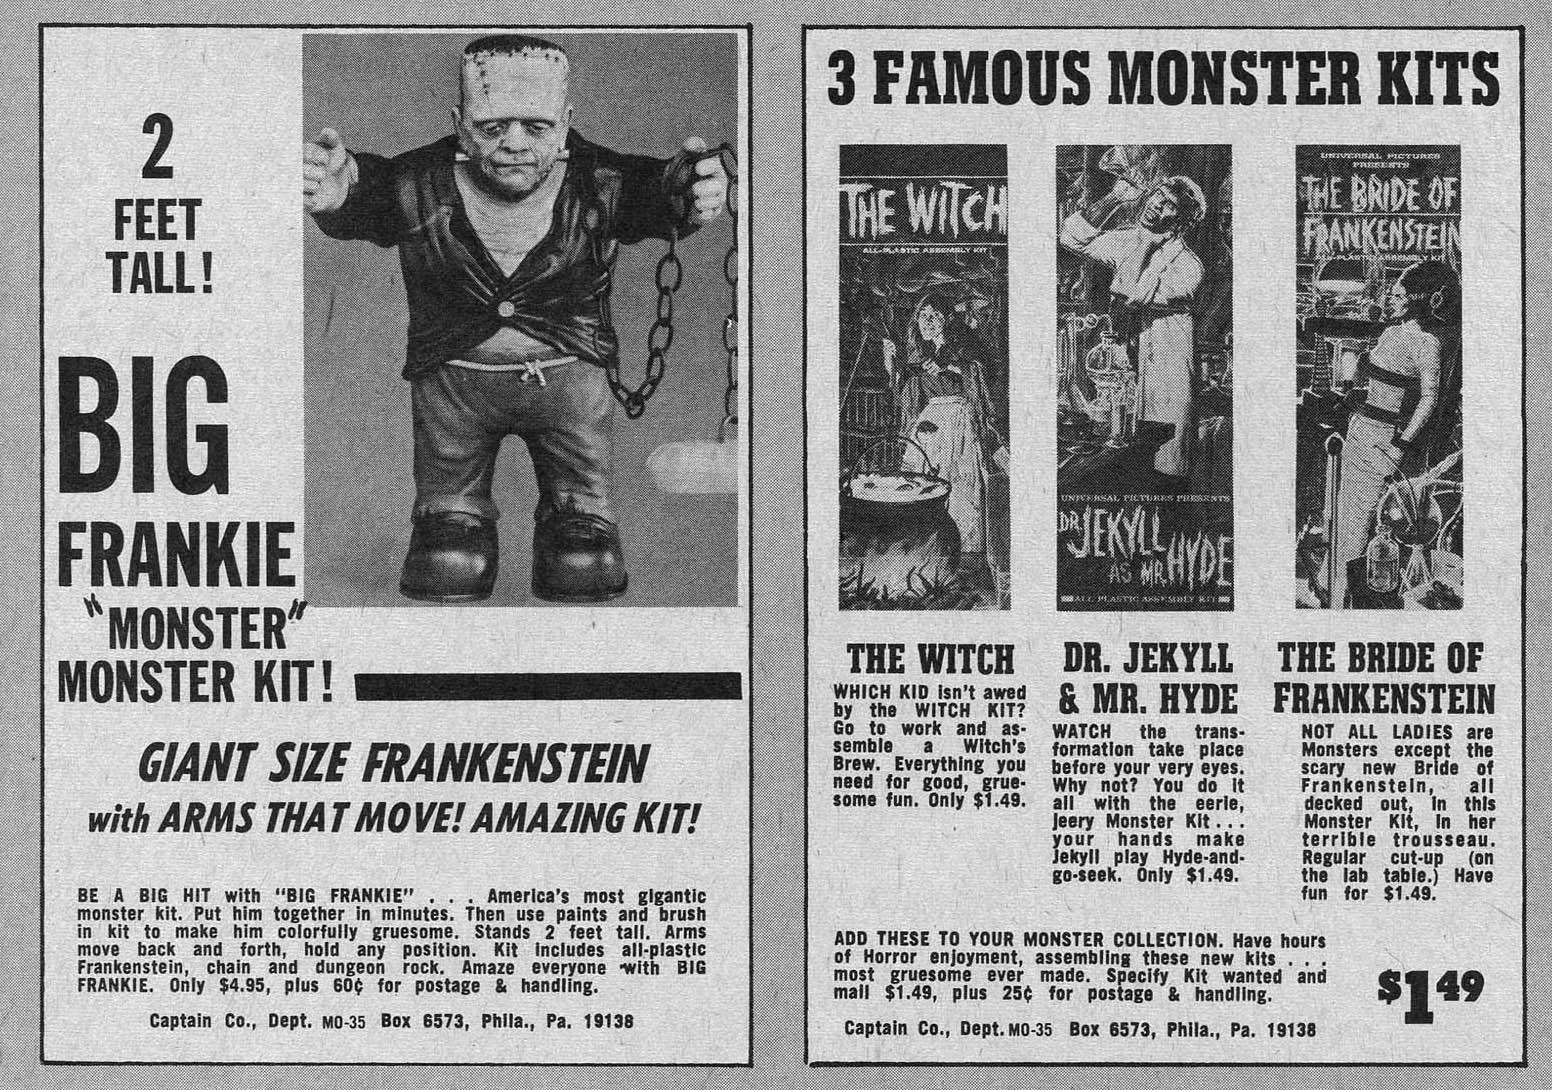 vintage monster magazine advert